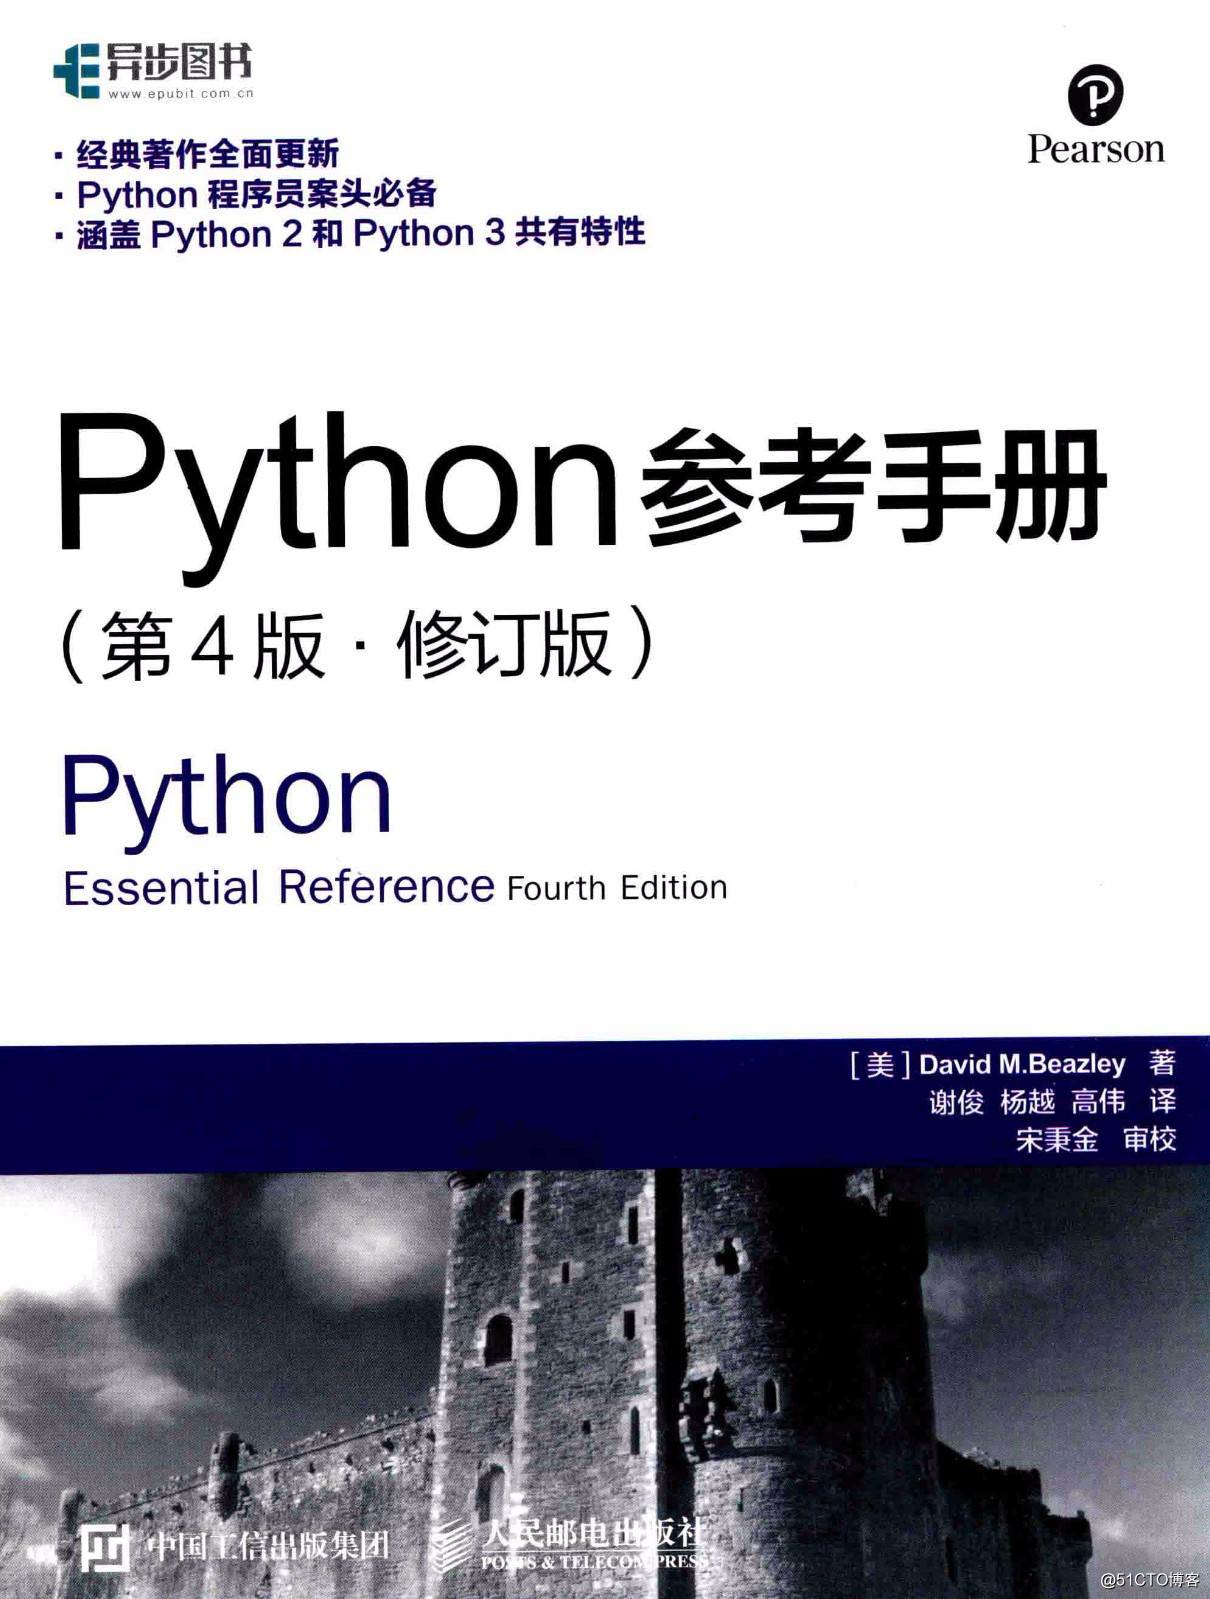 Python程式設計入門電子書及視訊教程-非常詳細『強烈推薦』